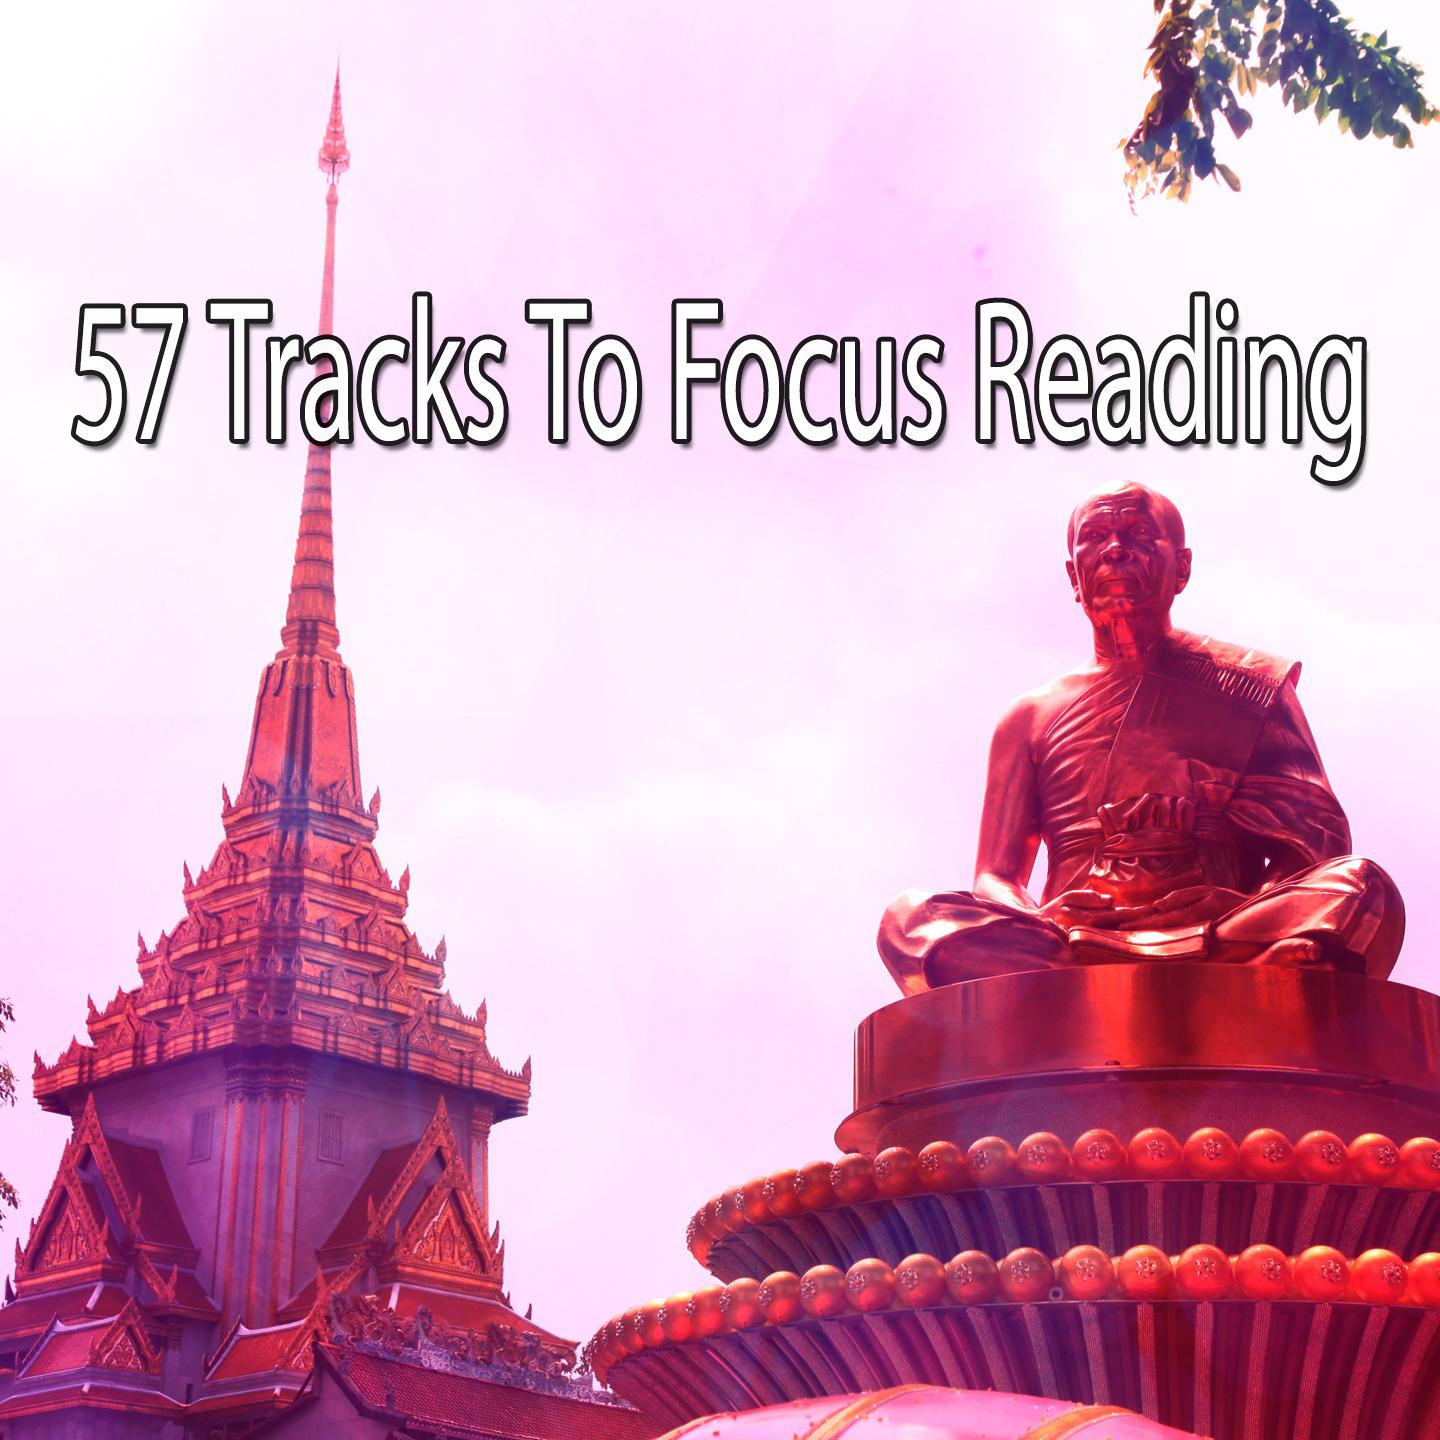 57 Tracks to Focus Reading